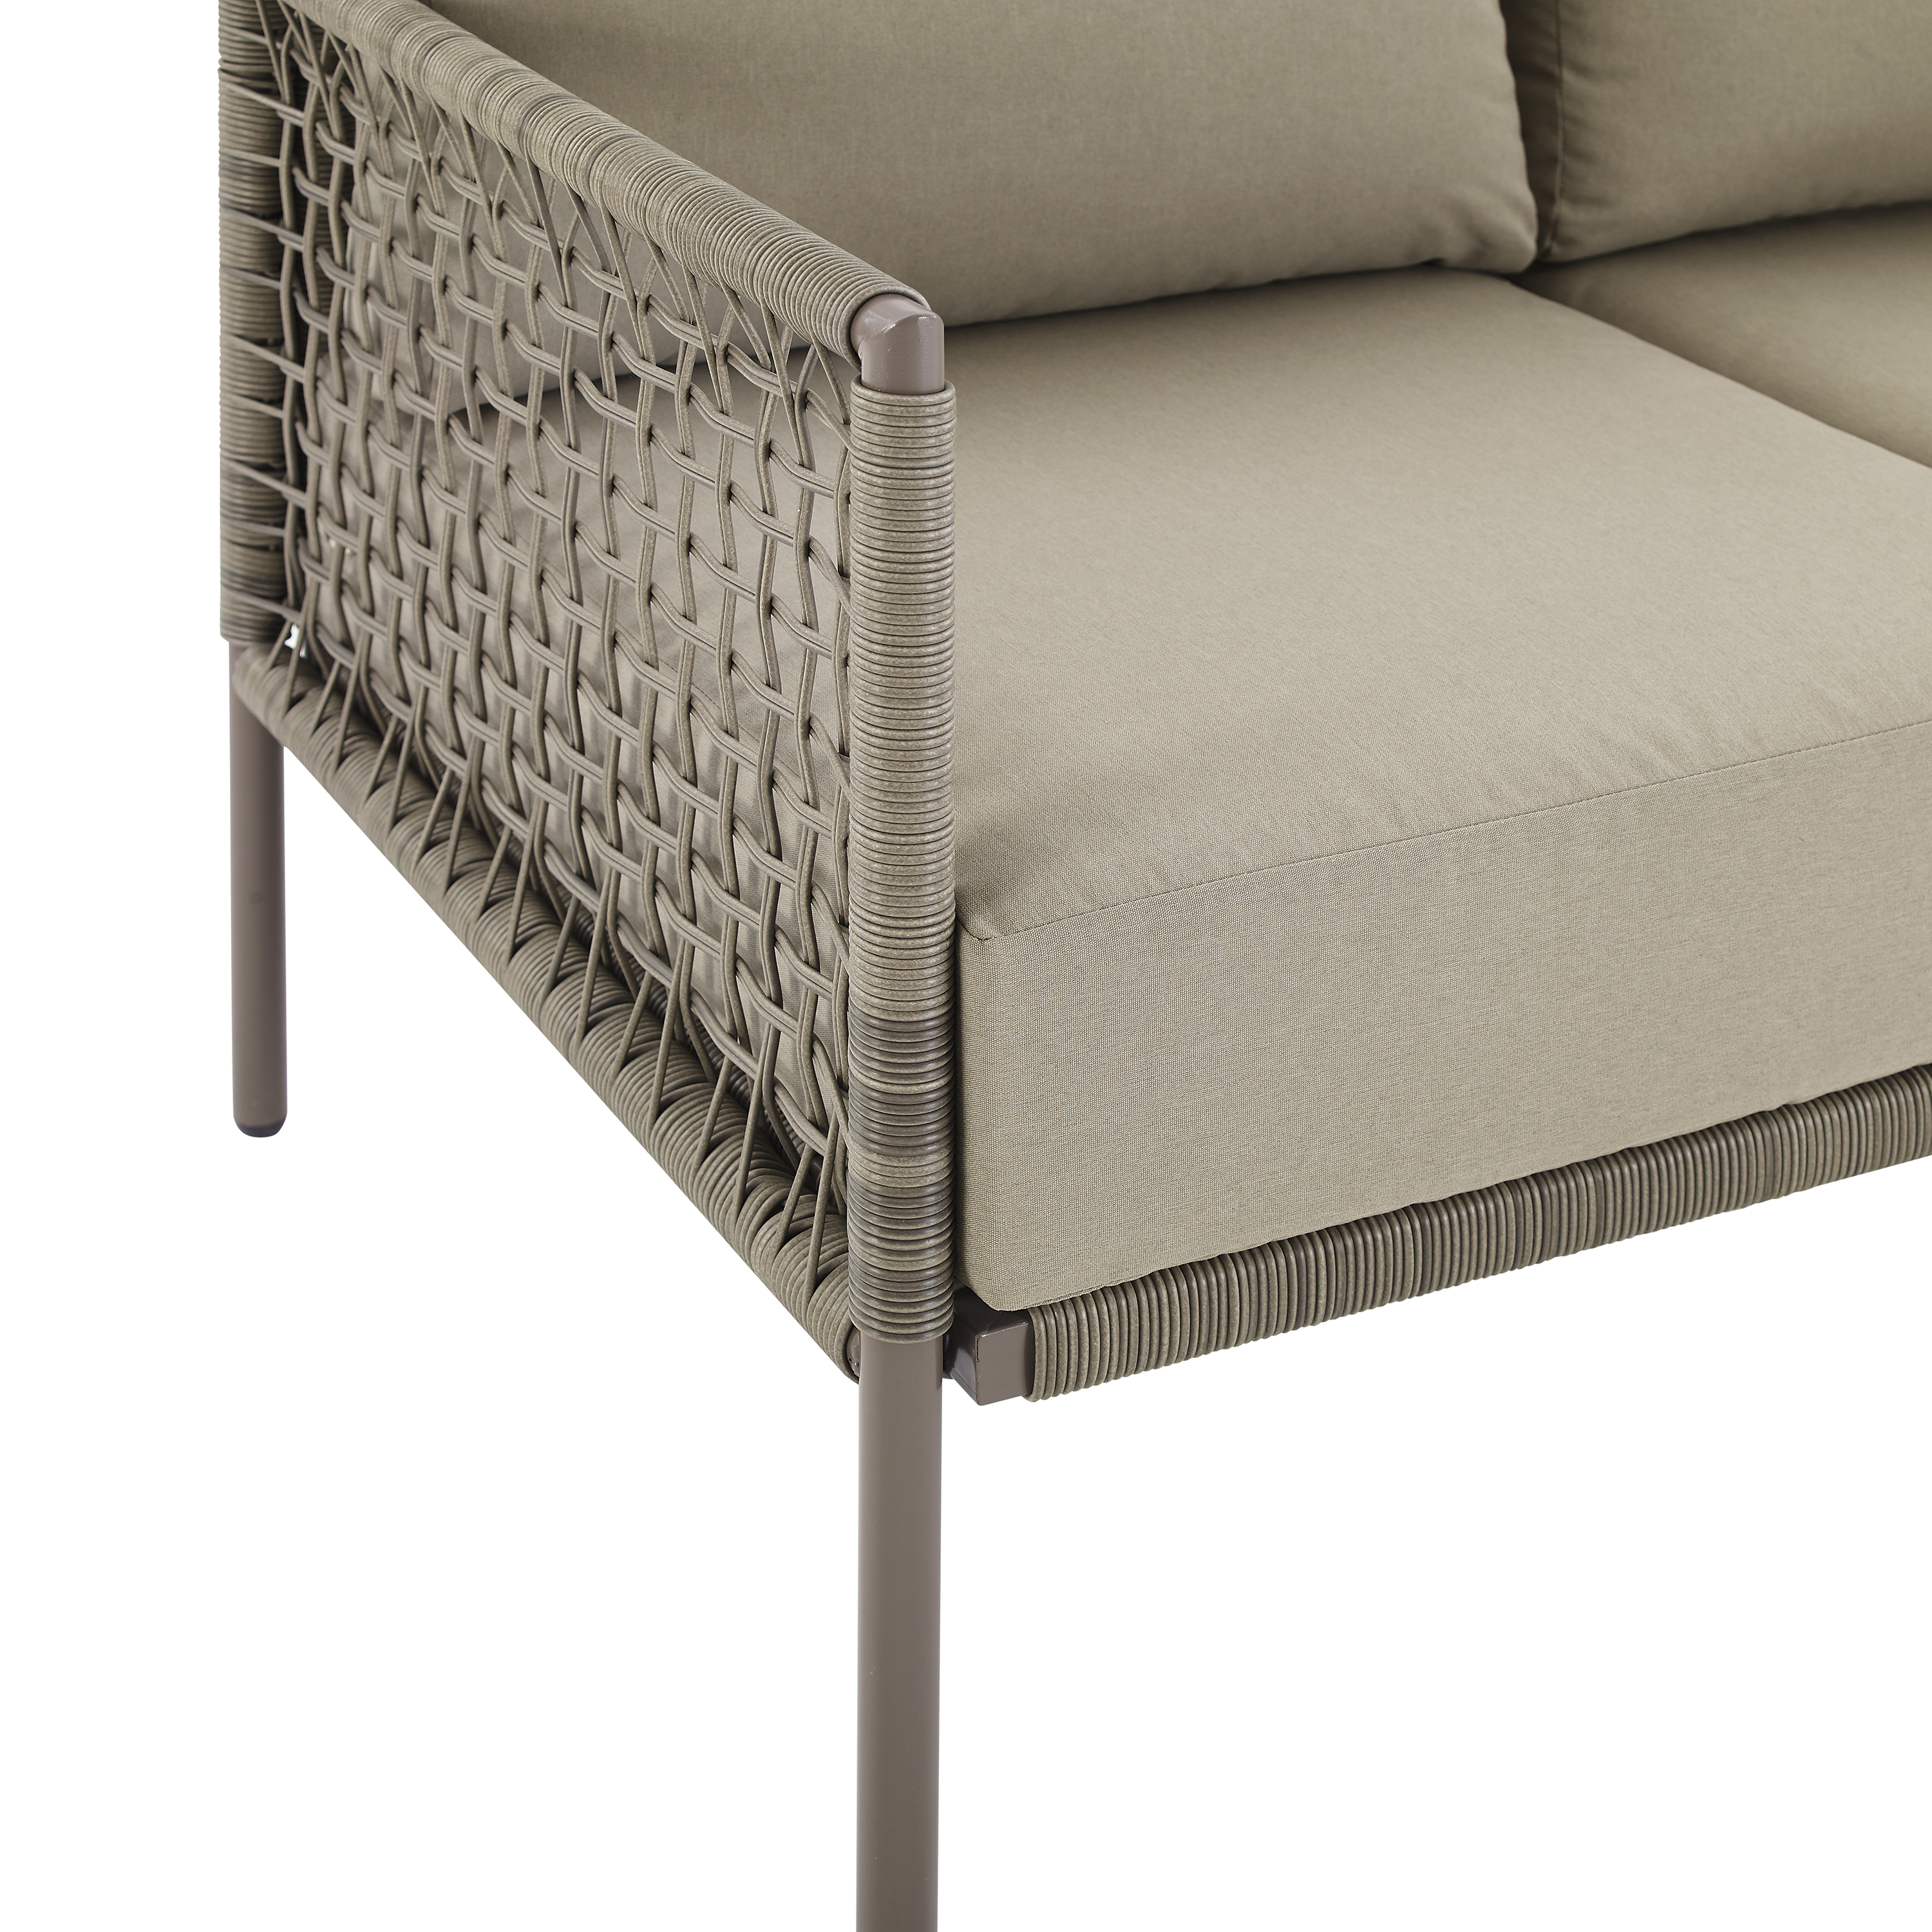 Crosley Furniture Cali Bay Modern Wicker Outdoor Sofa in Light Brown - image 4 of 11